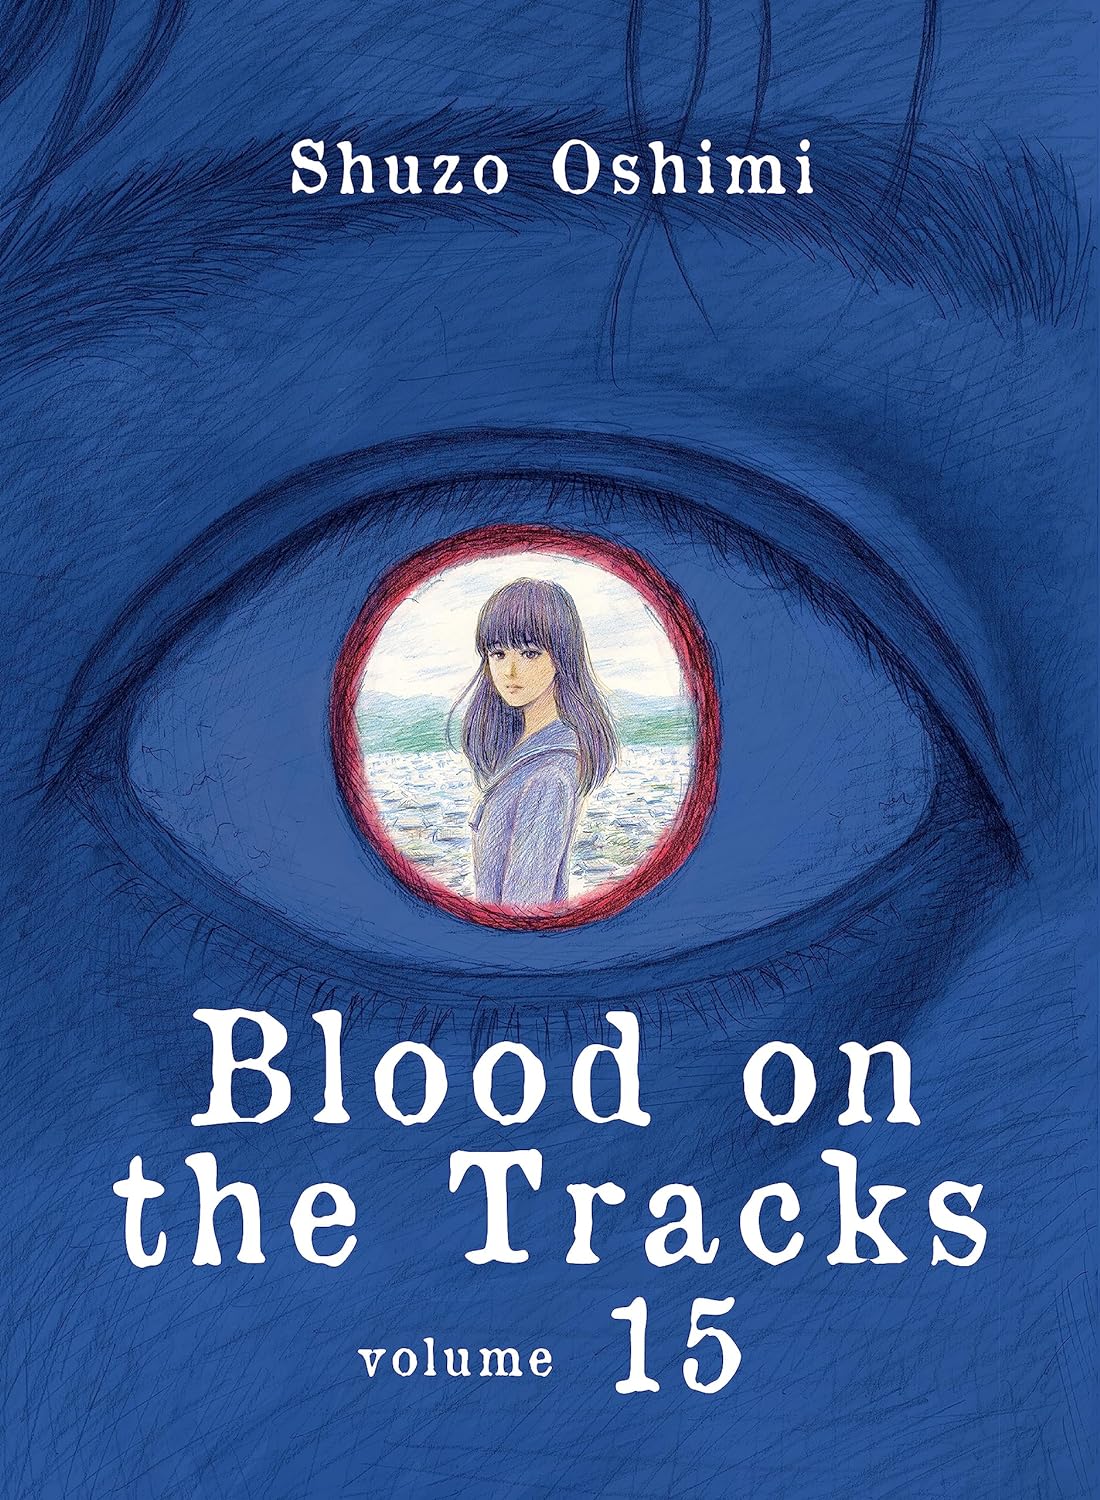 Blood on the Tracks Vol. 15